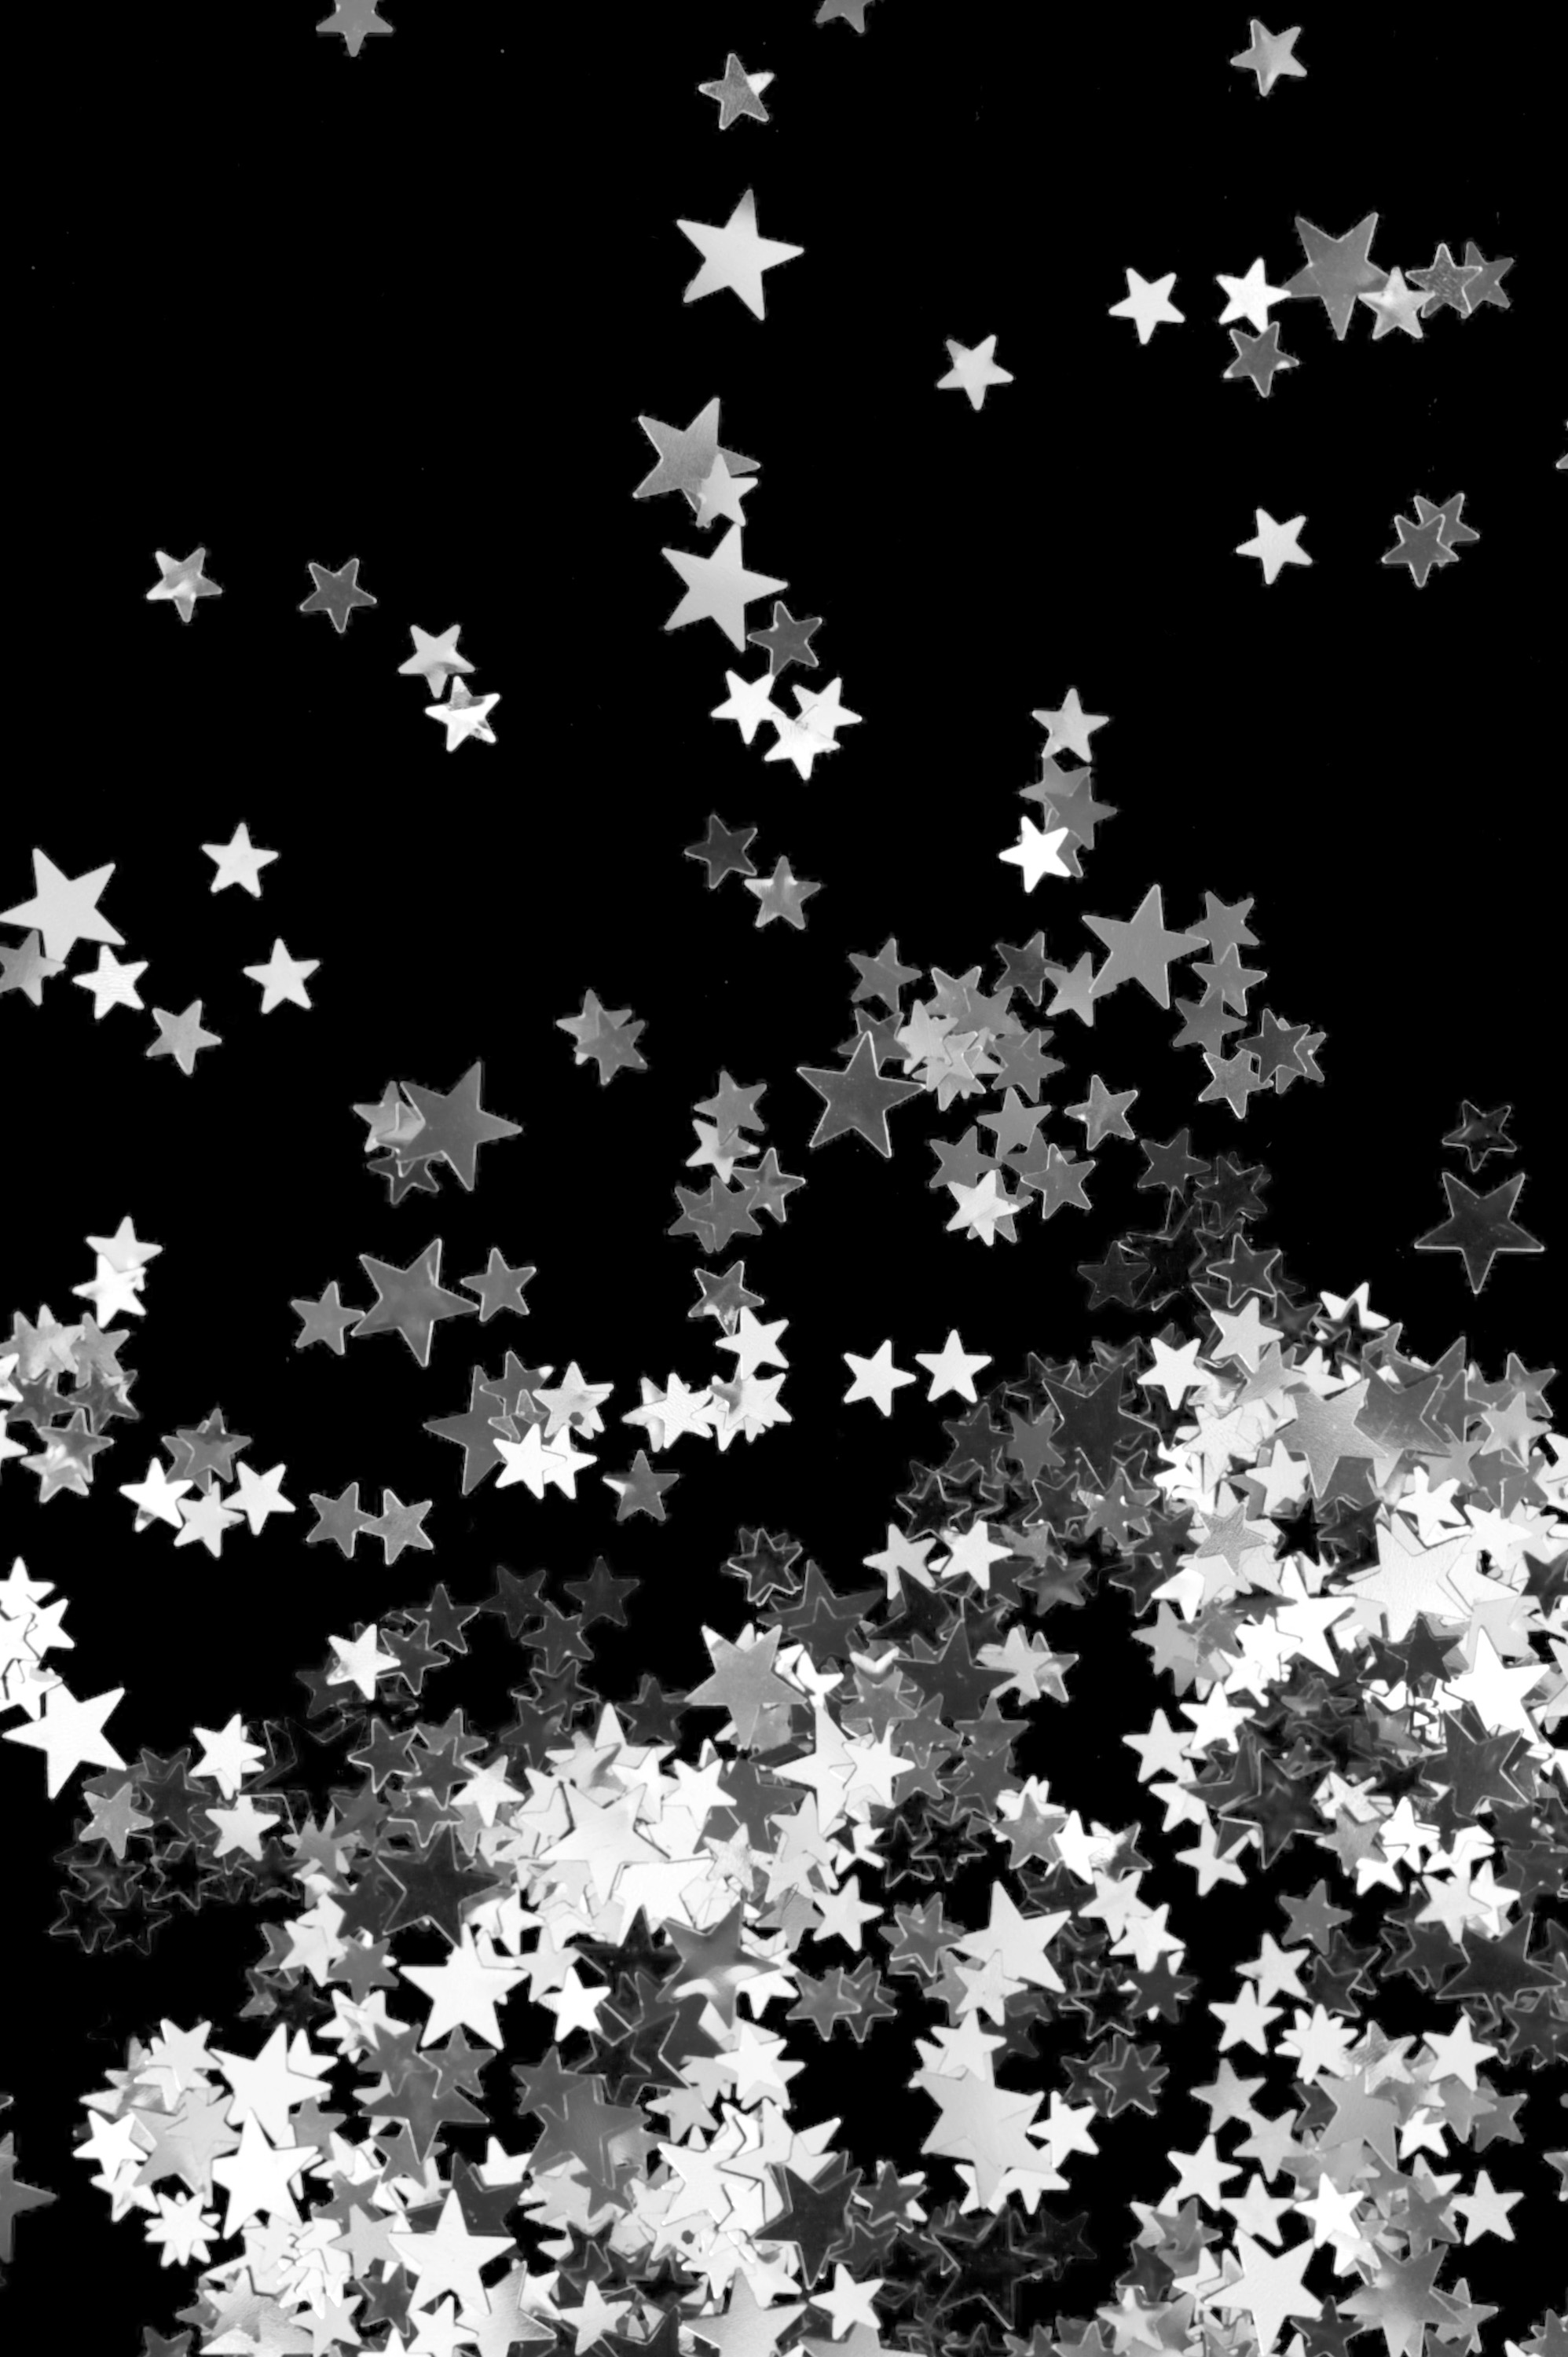 Original Image Of Silver Star Background 769kb